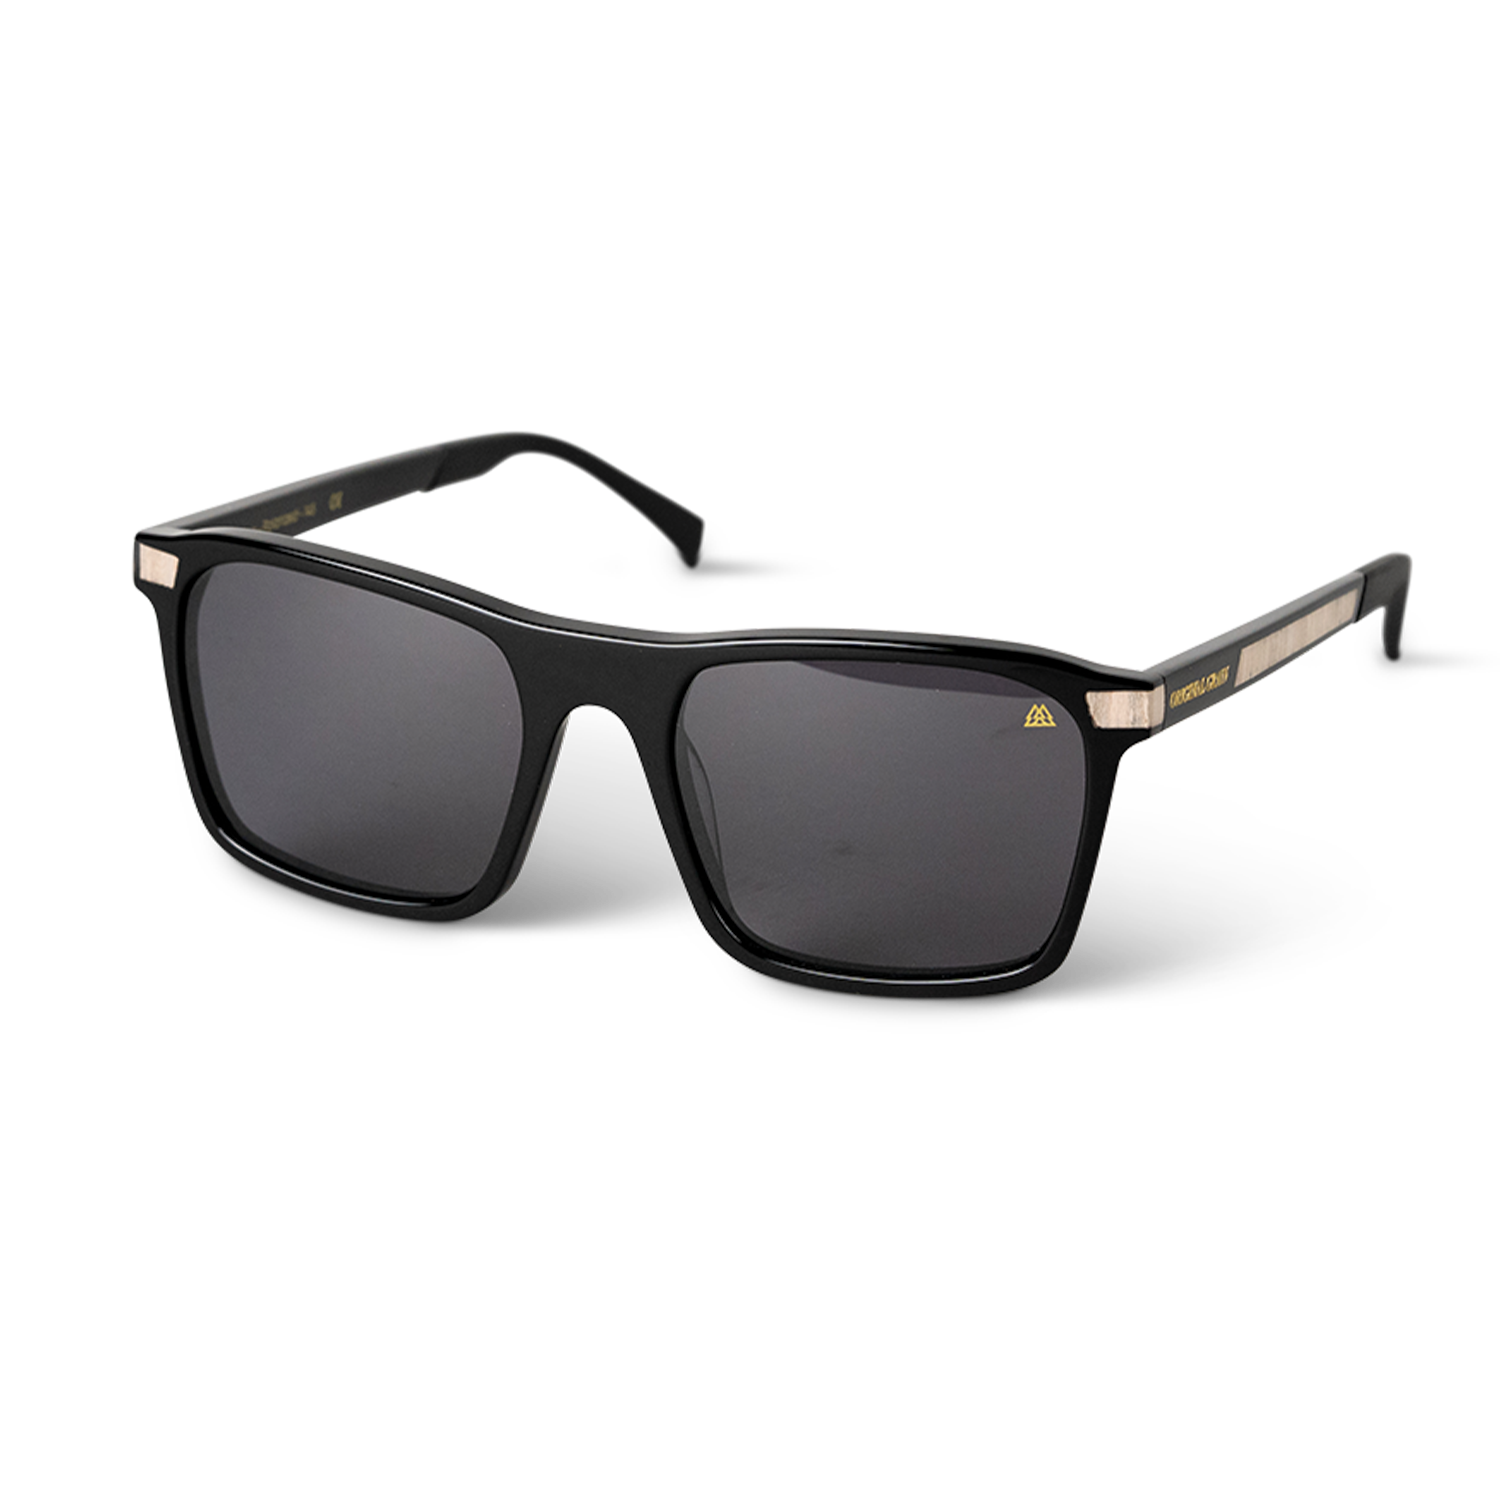 Emporio Armani Sunglasses EA9248/S Black Frame Black Polycarbonate Lens  Italy | eBay